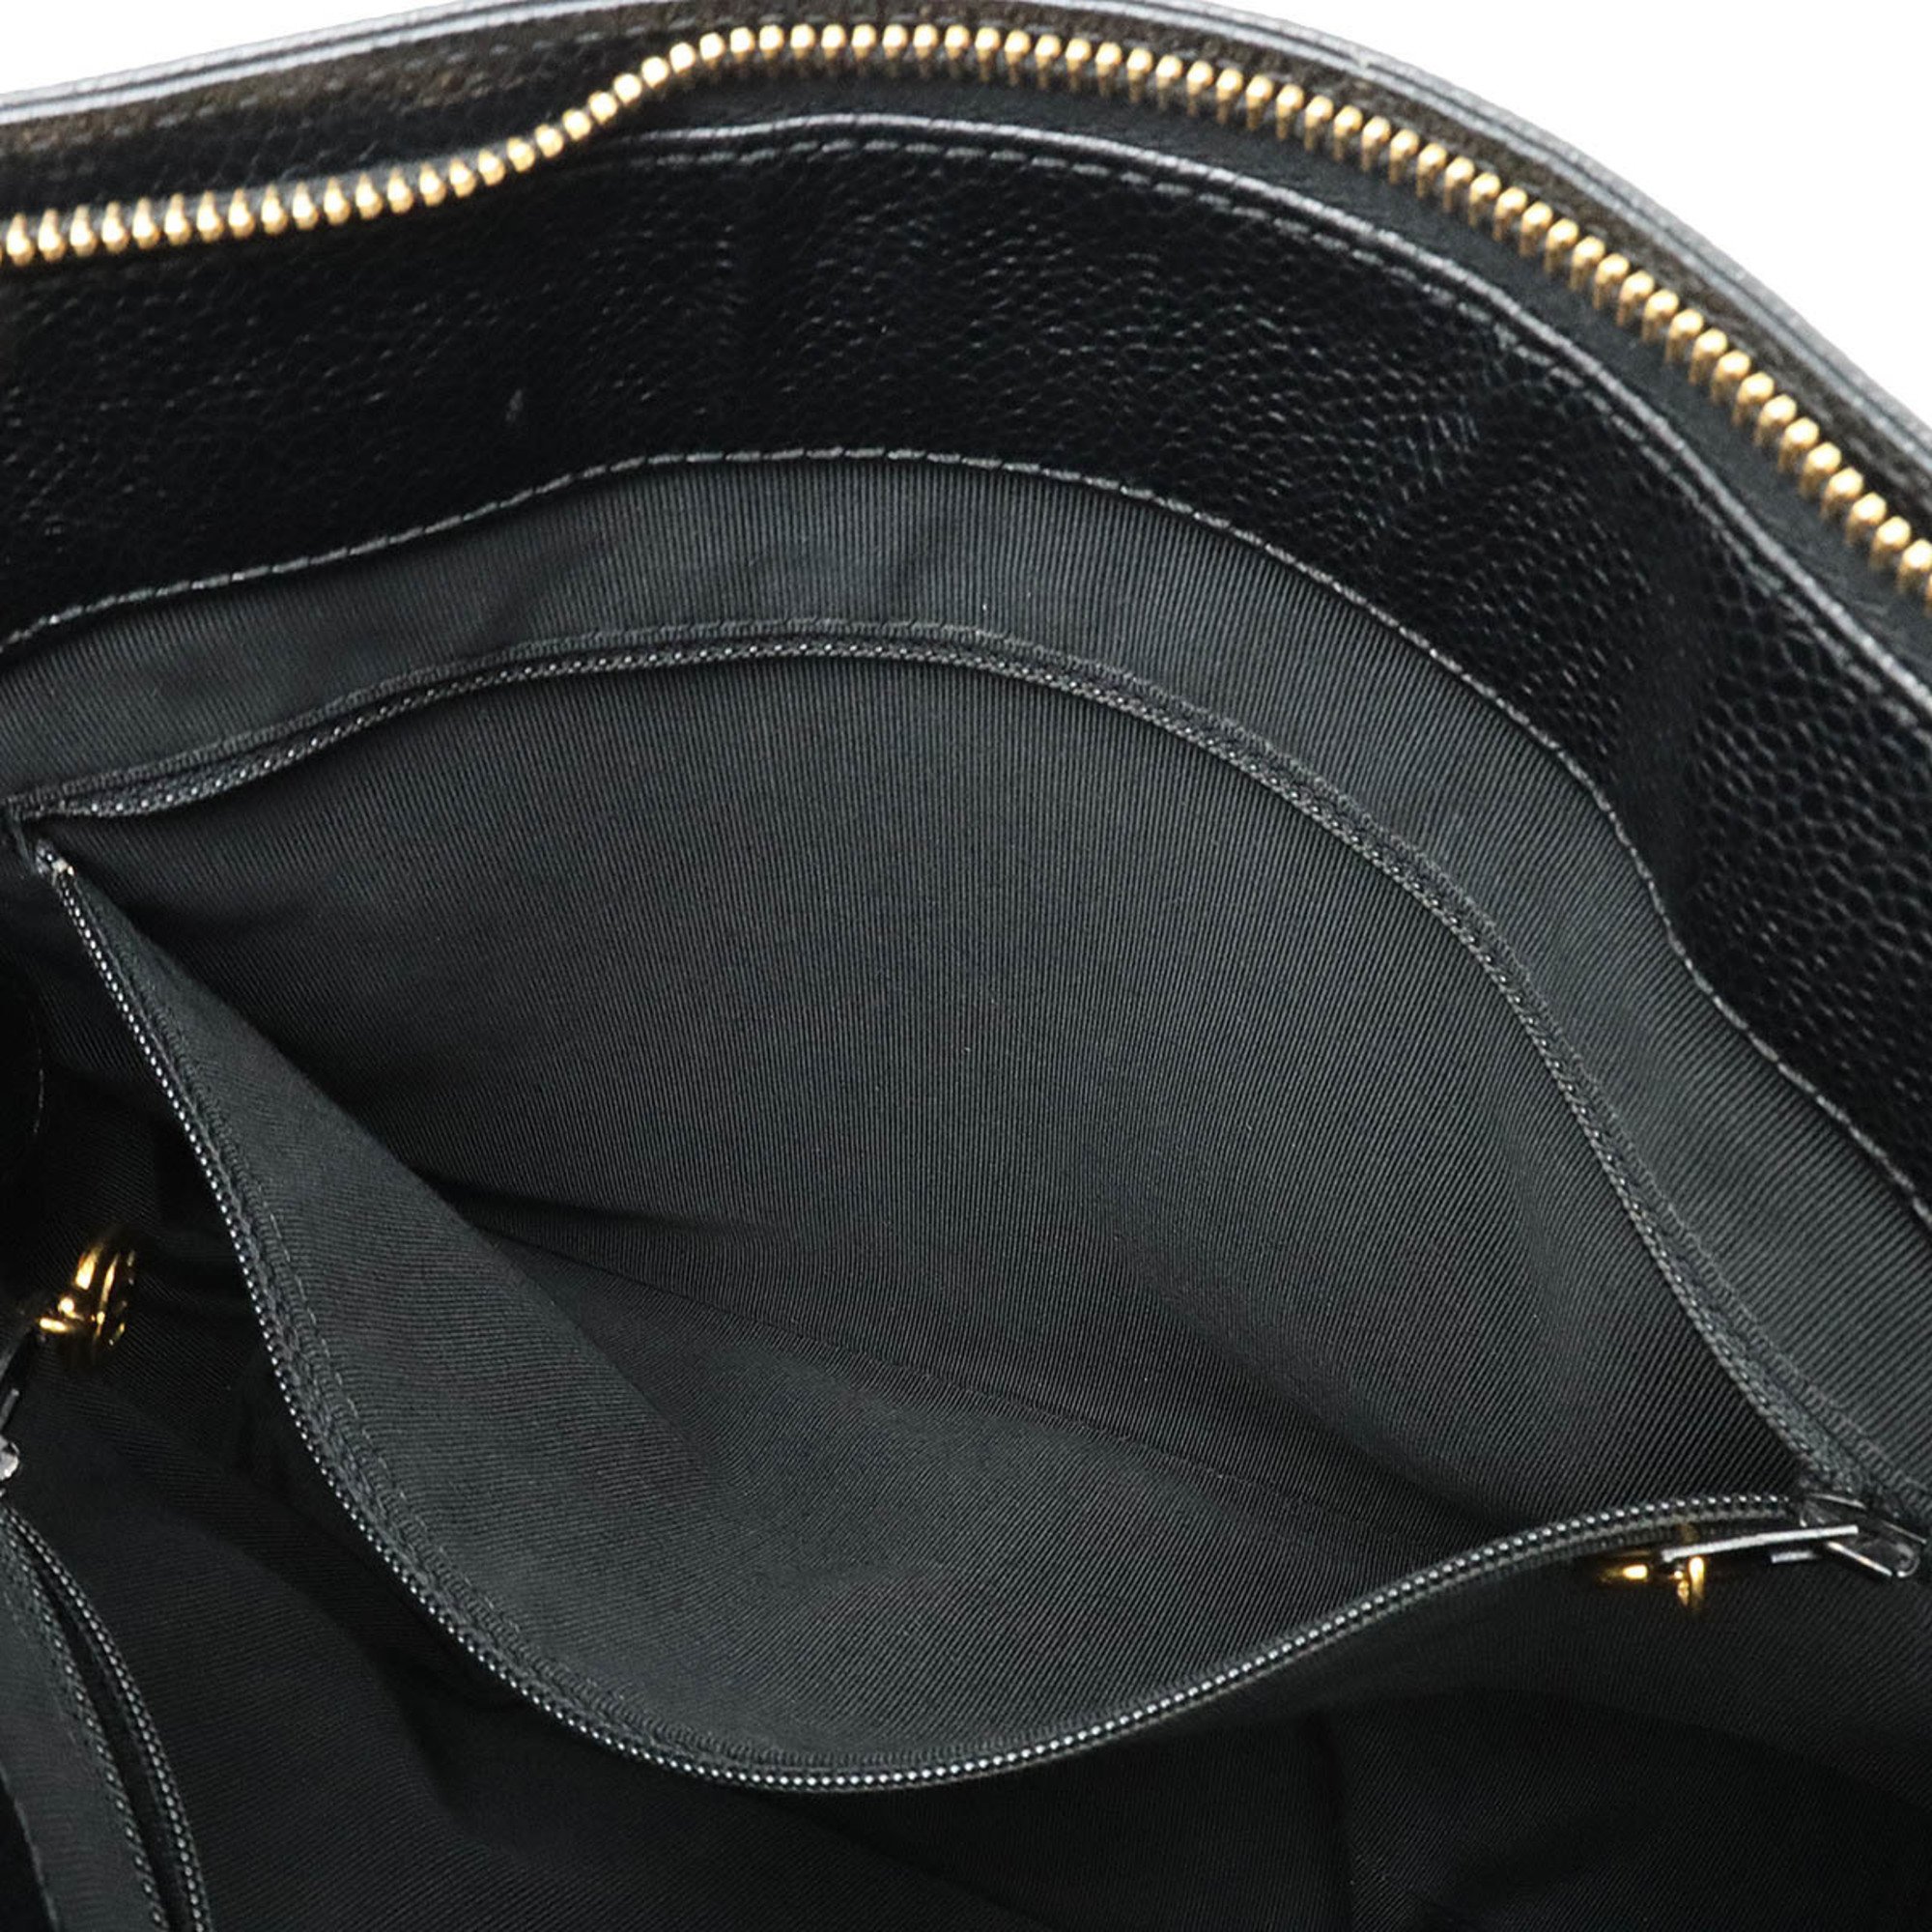 CHANEL Chanel tote bag handbag caviar skin leather black